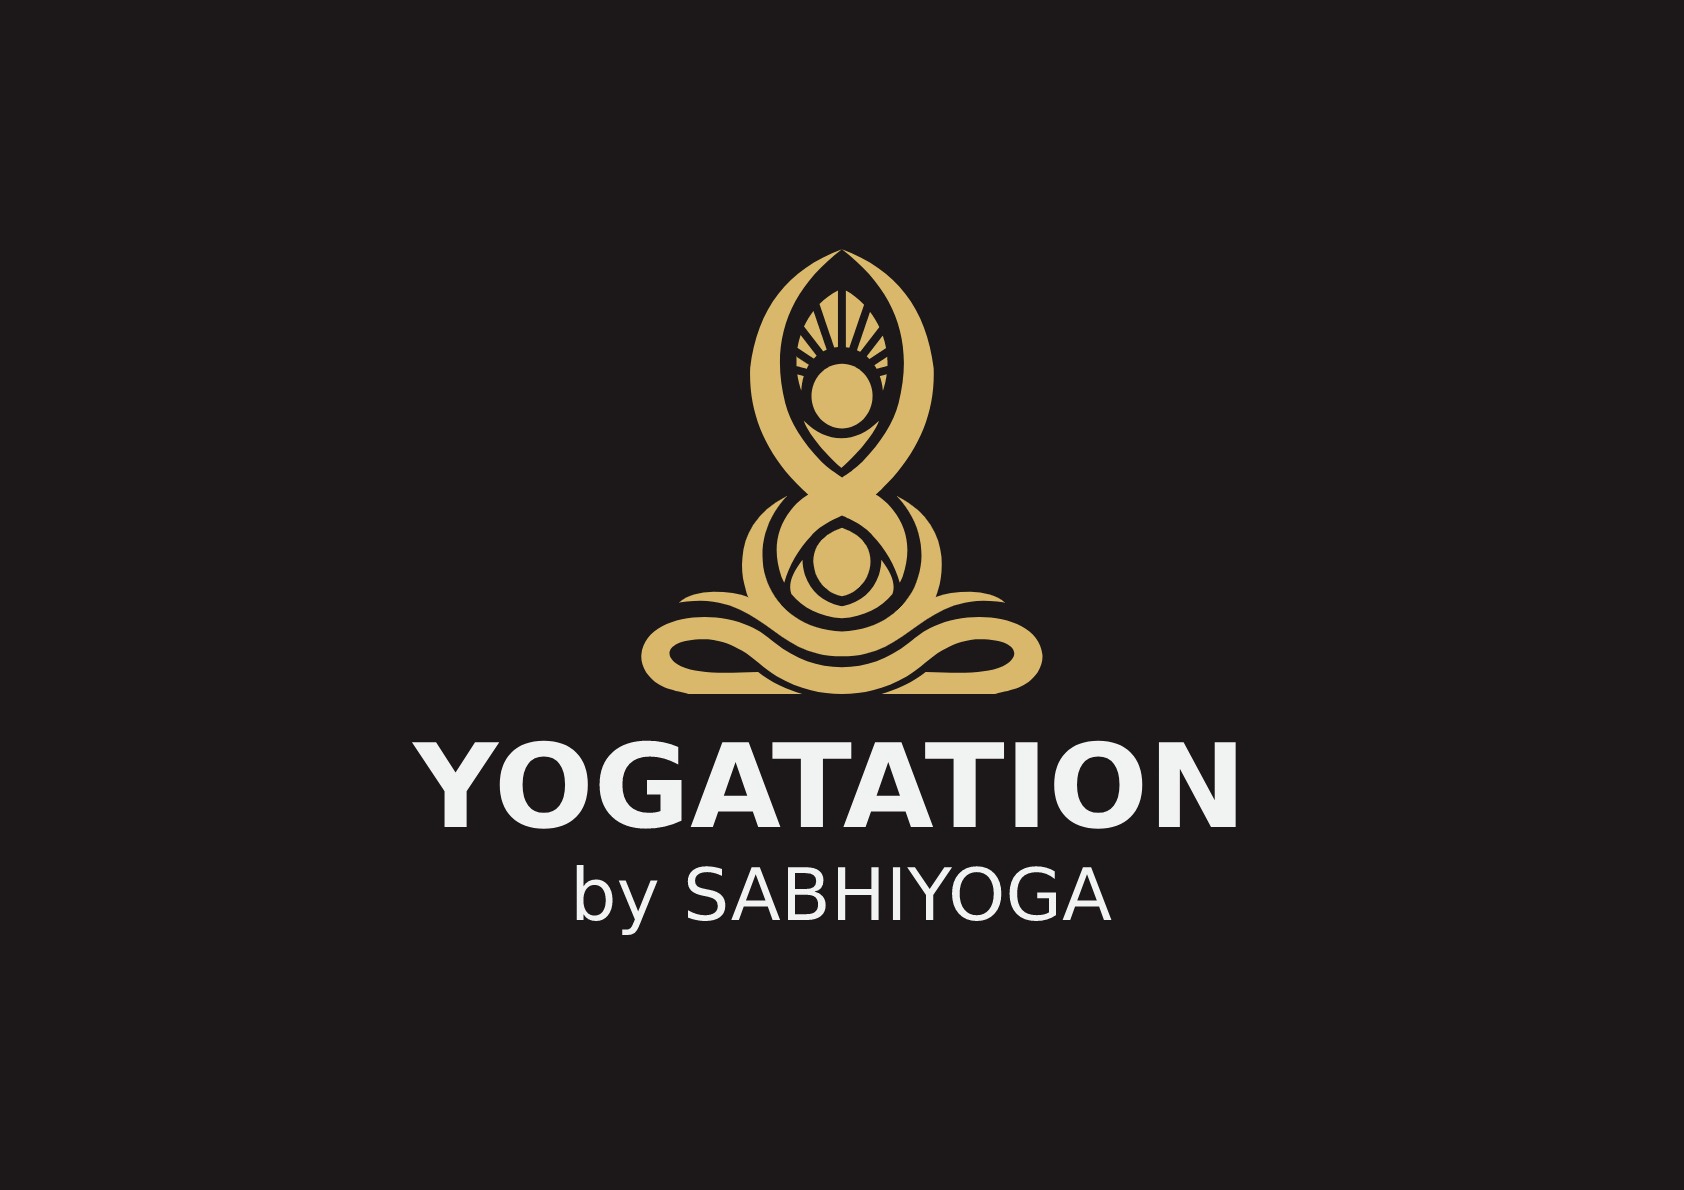 Yogatation by Sabhiyoga